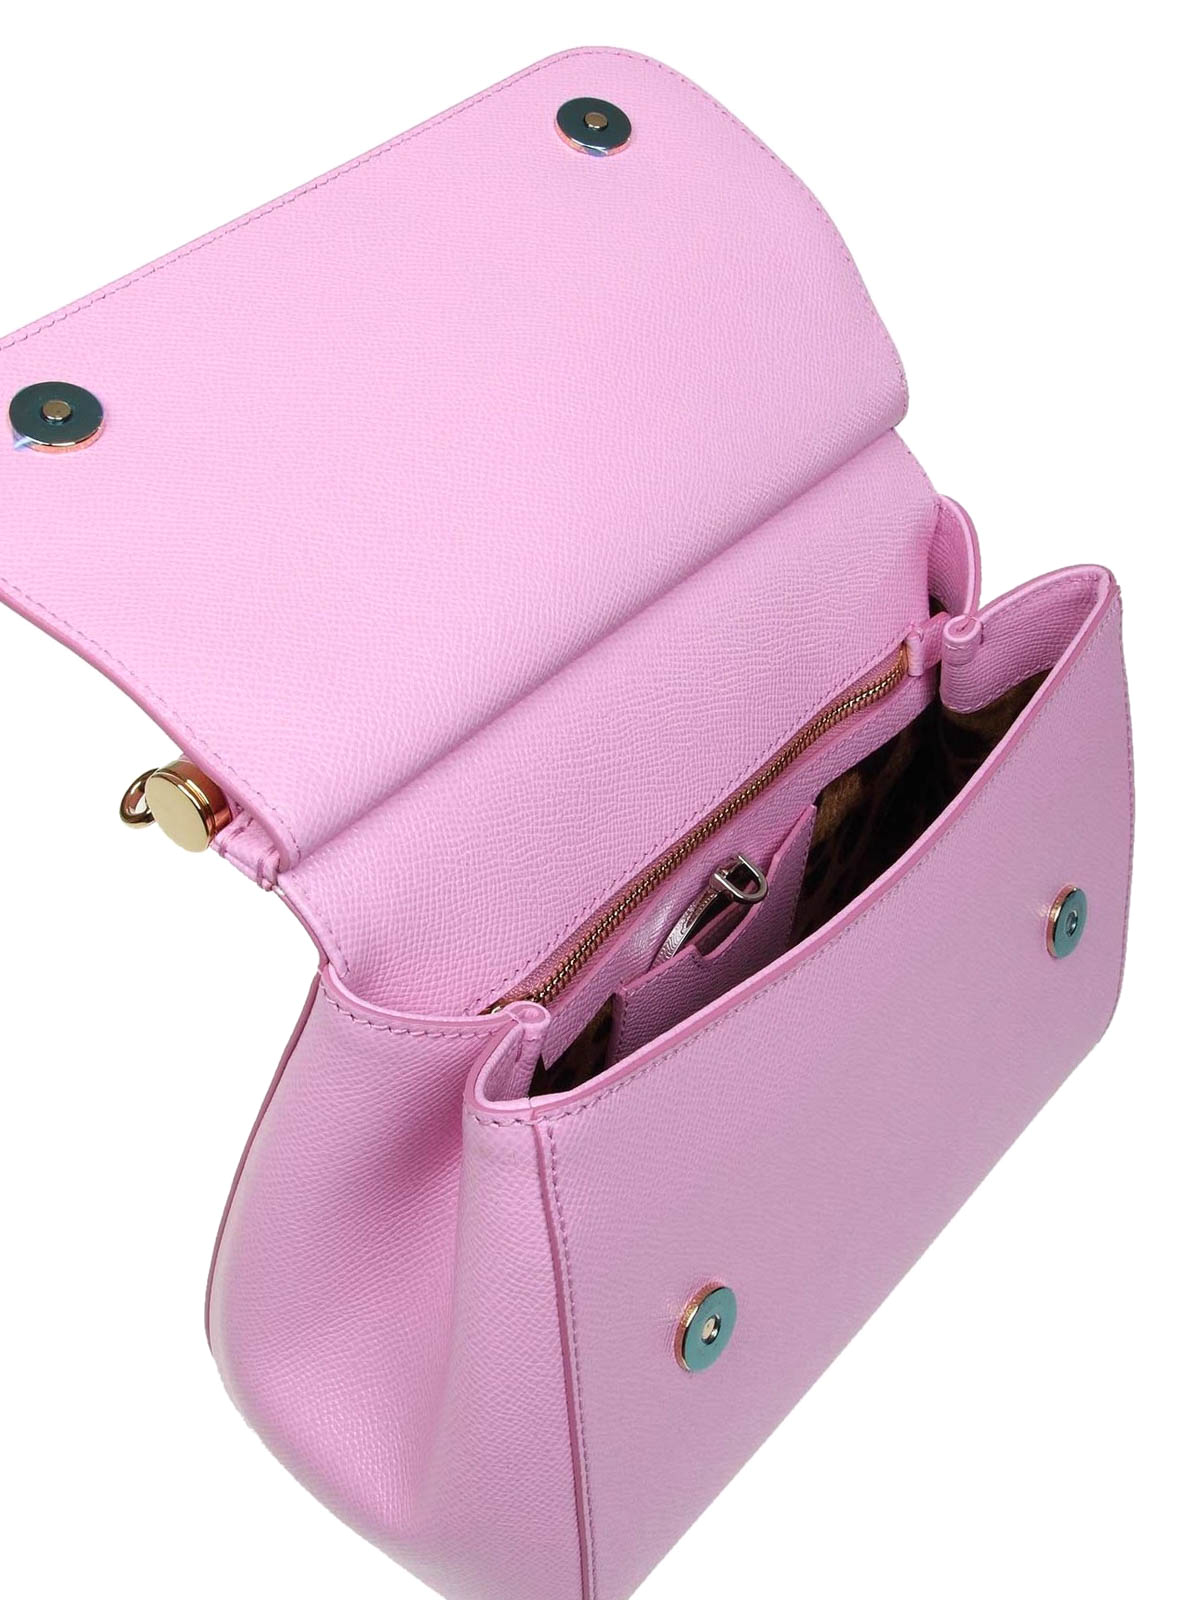 Dolce & Gabbana Pink Leather Medium Miss Sicily Bag Dolce & Gabbana